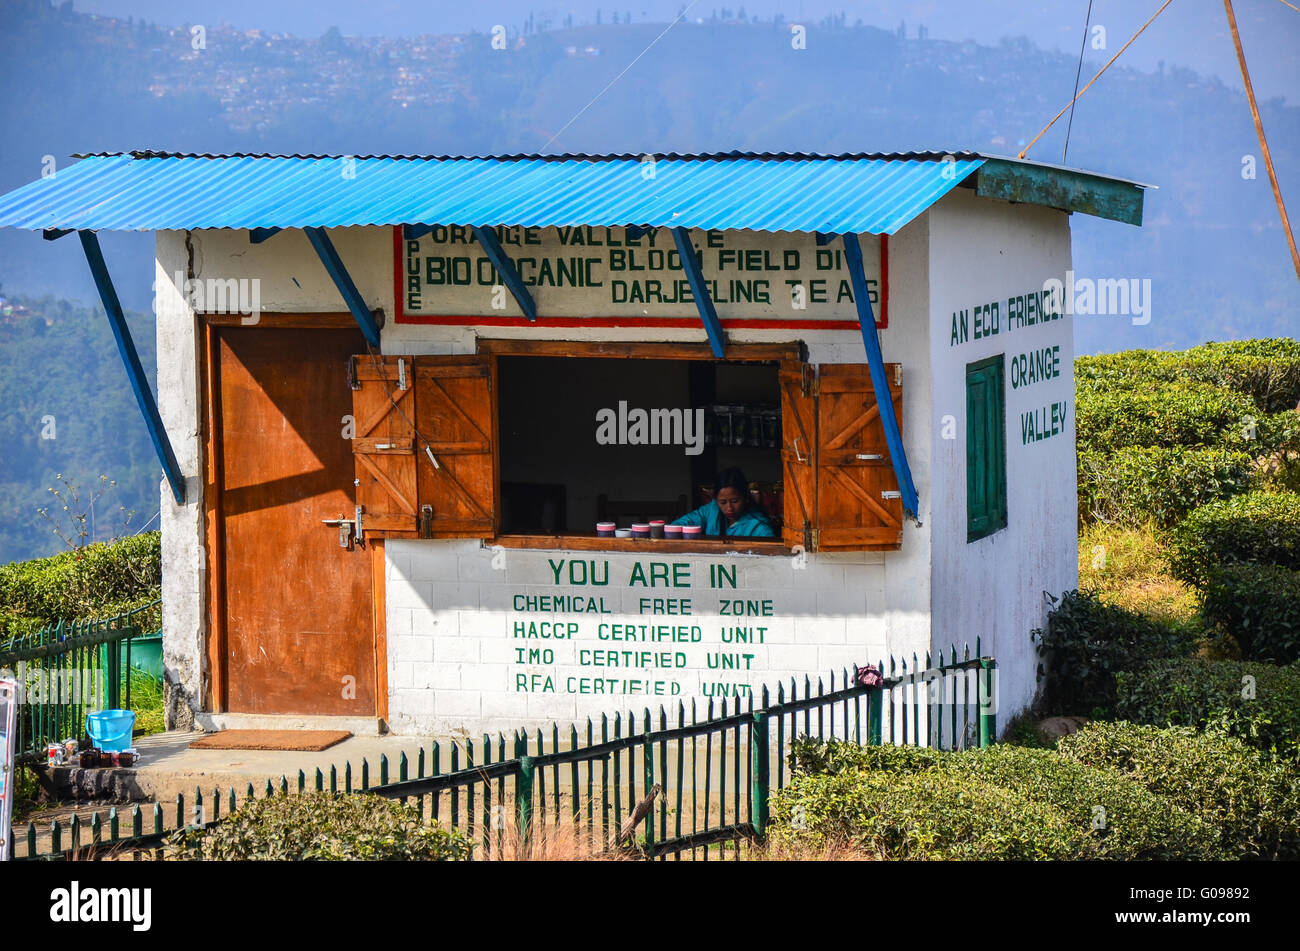 Bloomfield Division shop selling Pure, Bio Organic, Orange Valley Tea Estate Darjeeling Tea. Stock Photo